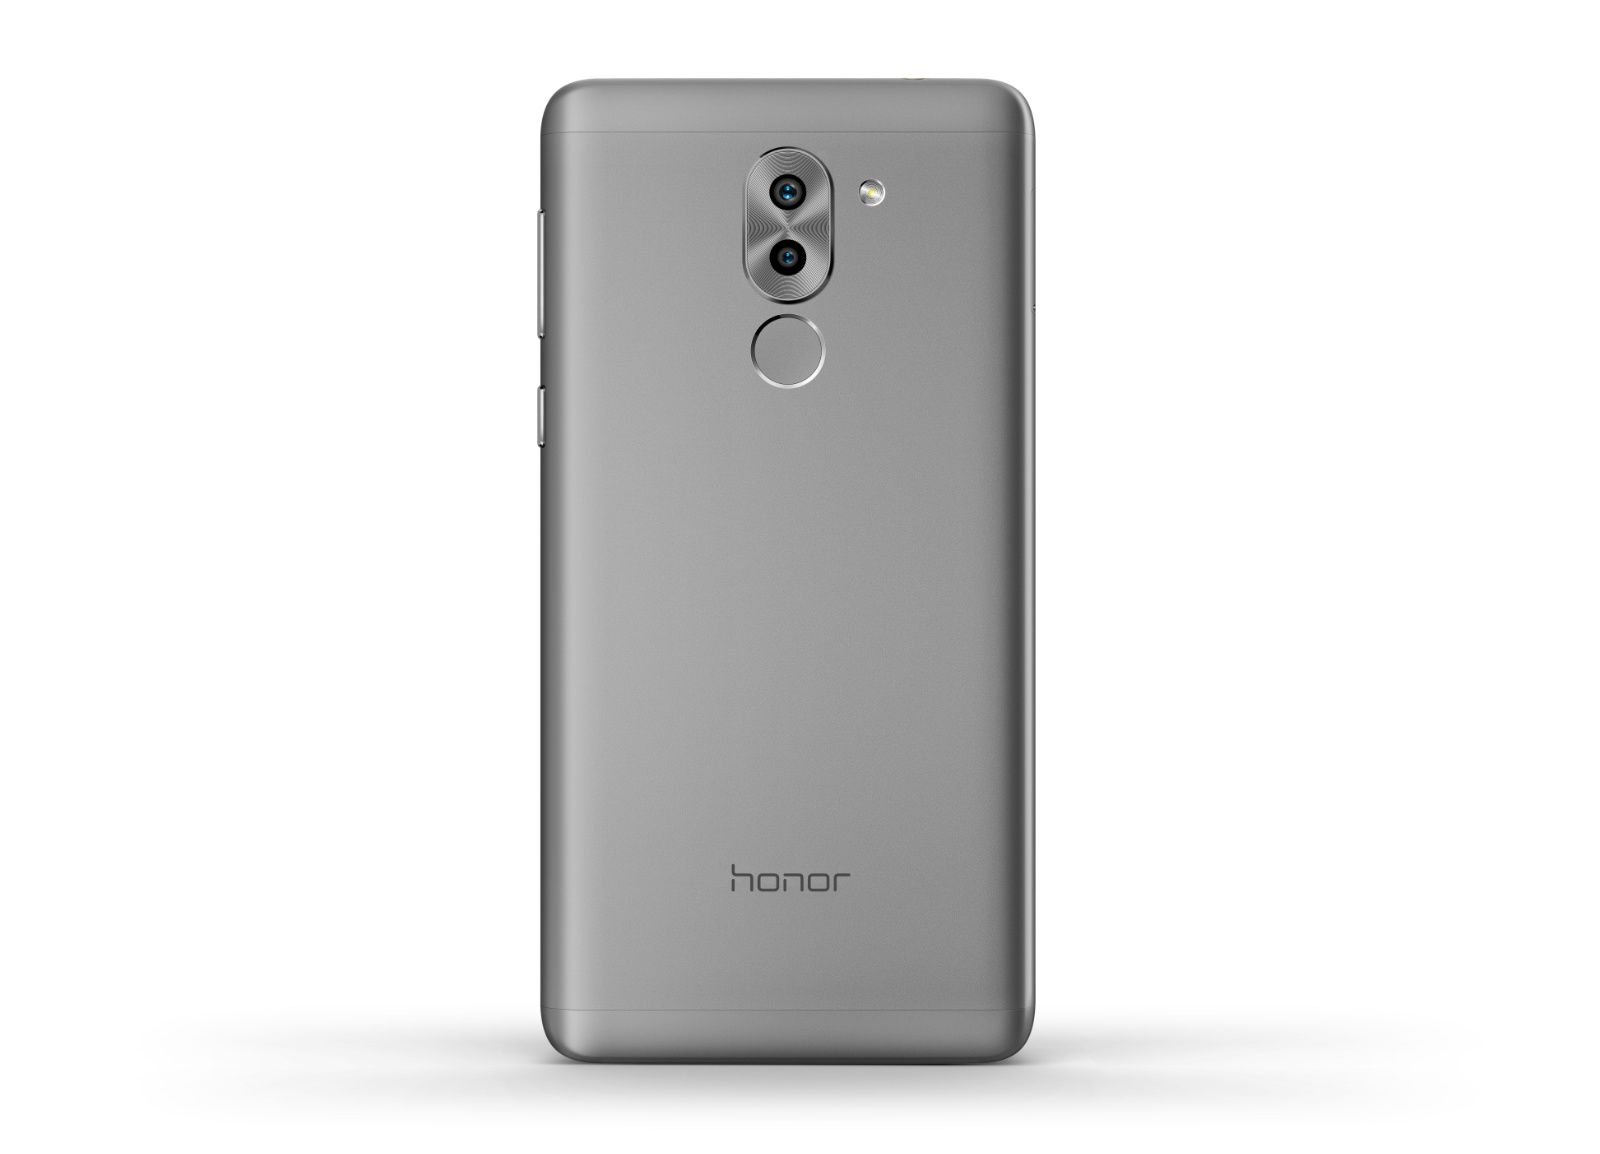 honor 6x brings dual camera in a super affordable metal phone image 6